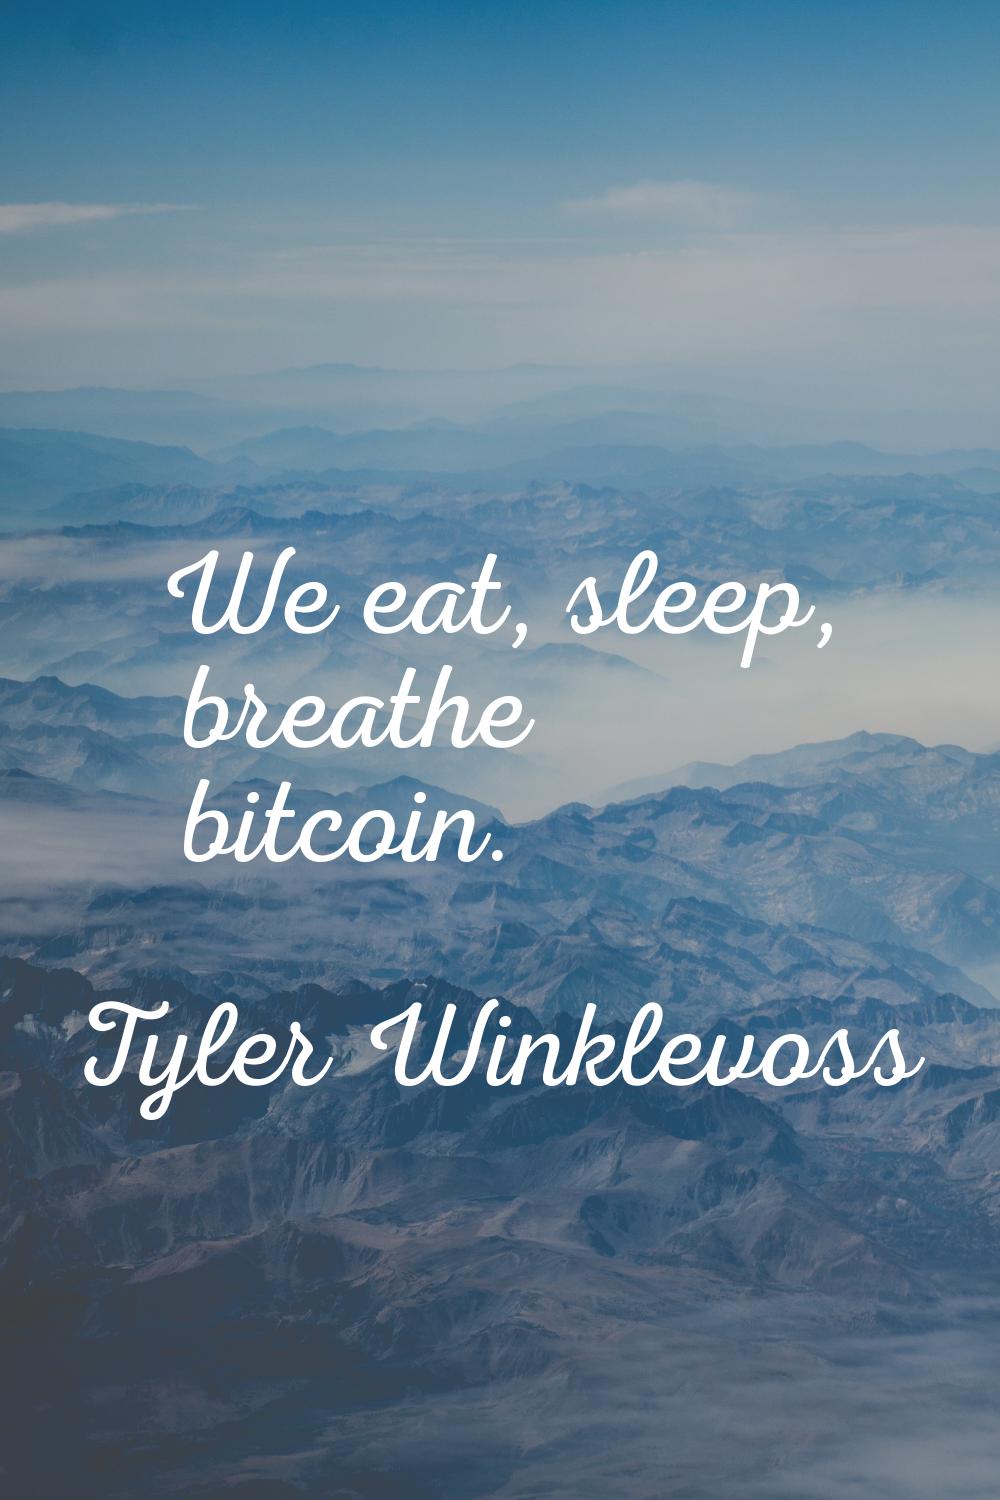 We eat, sleep, breathe bitcoin.